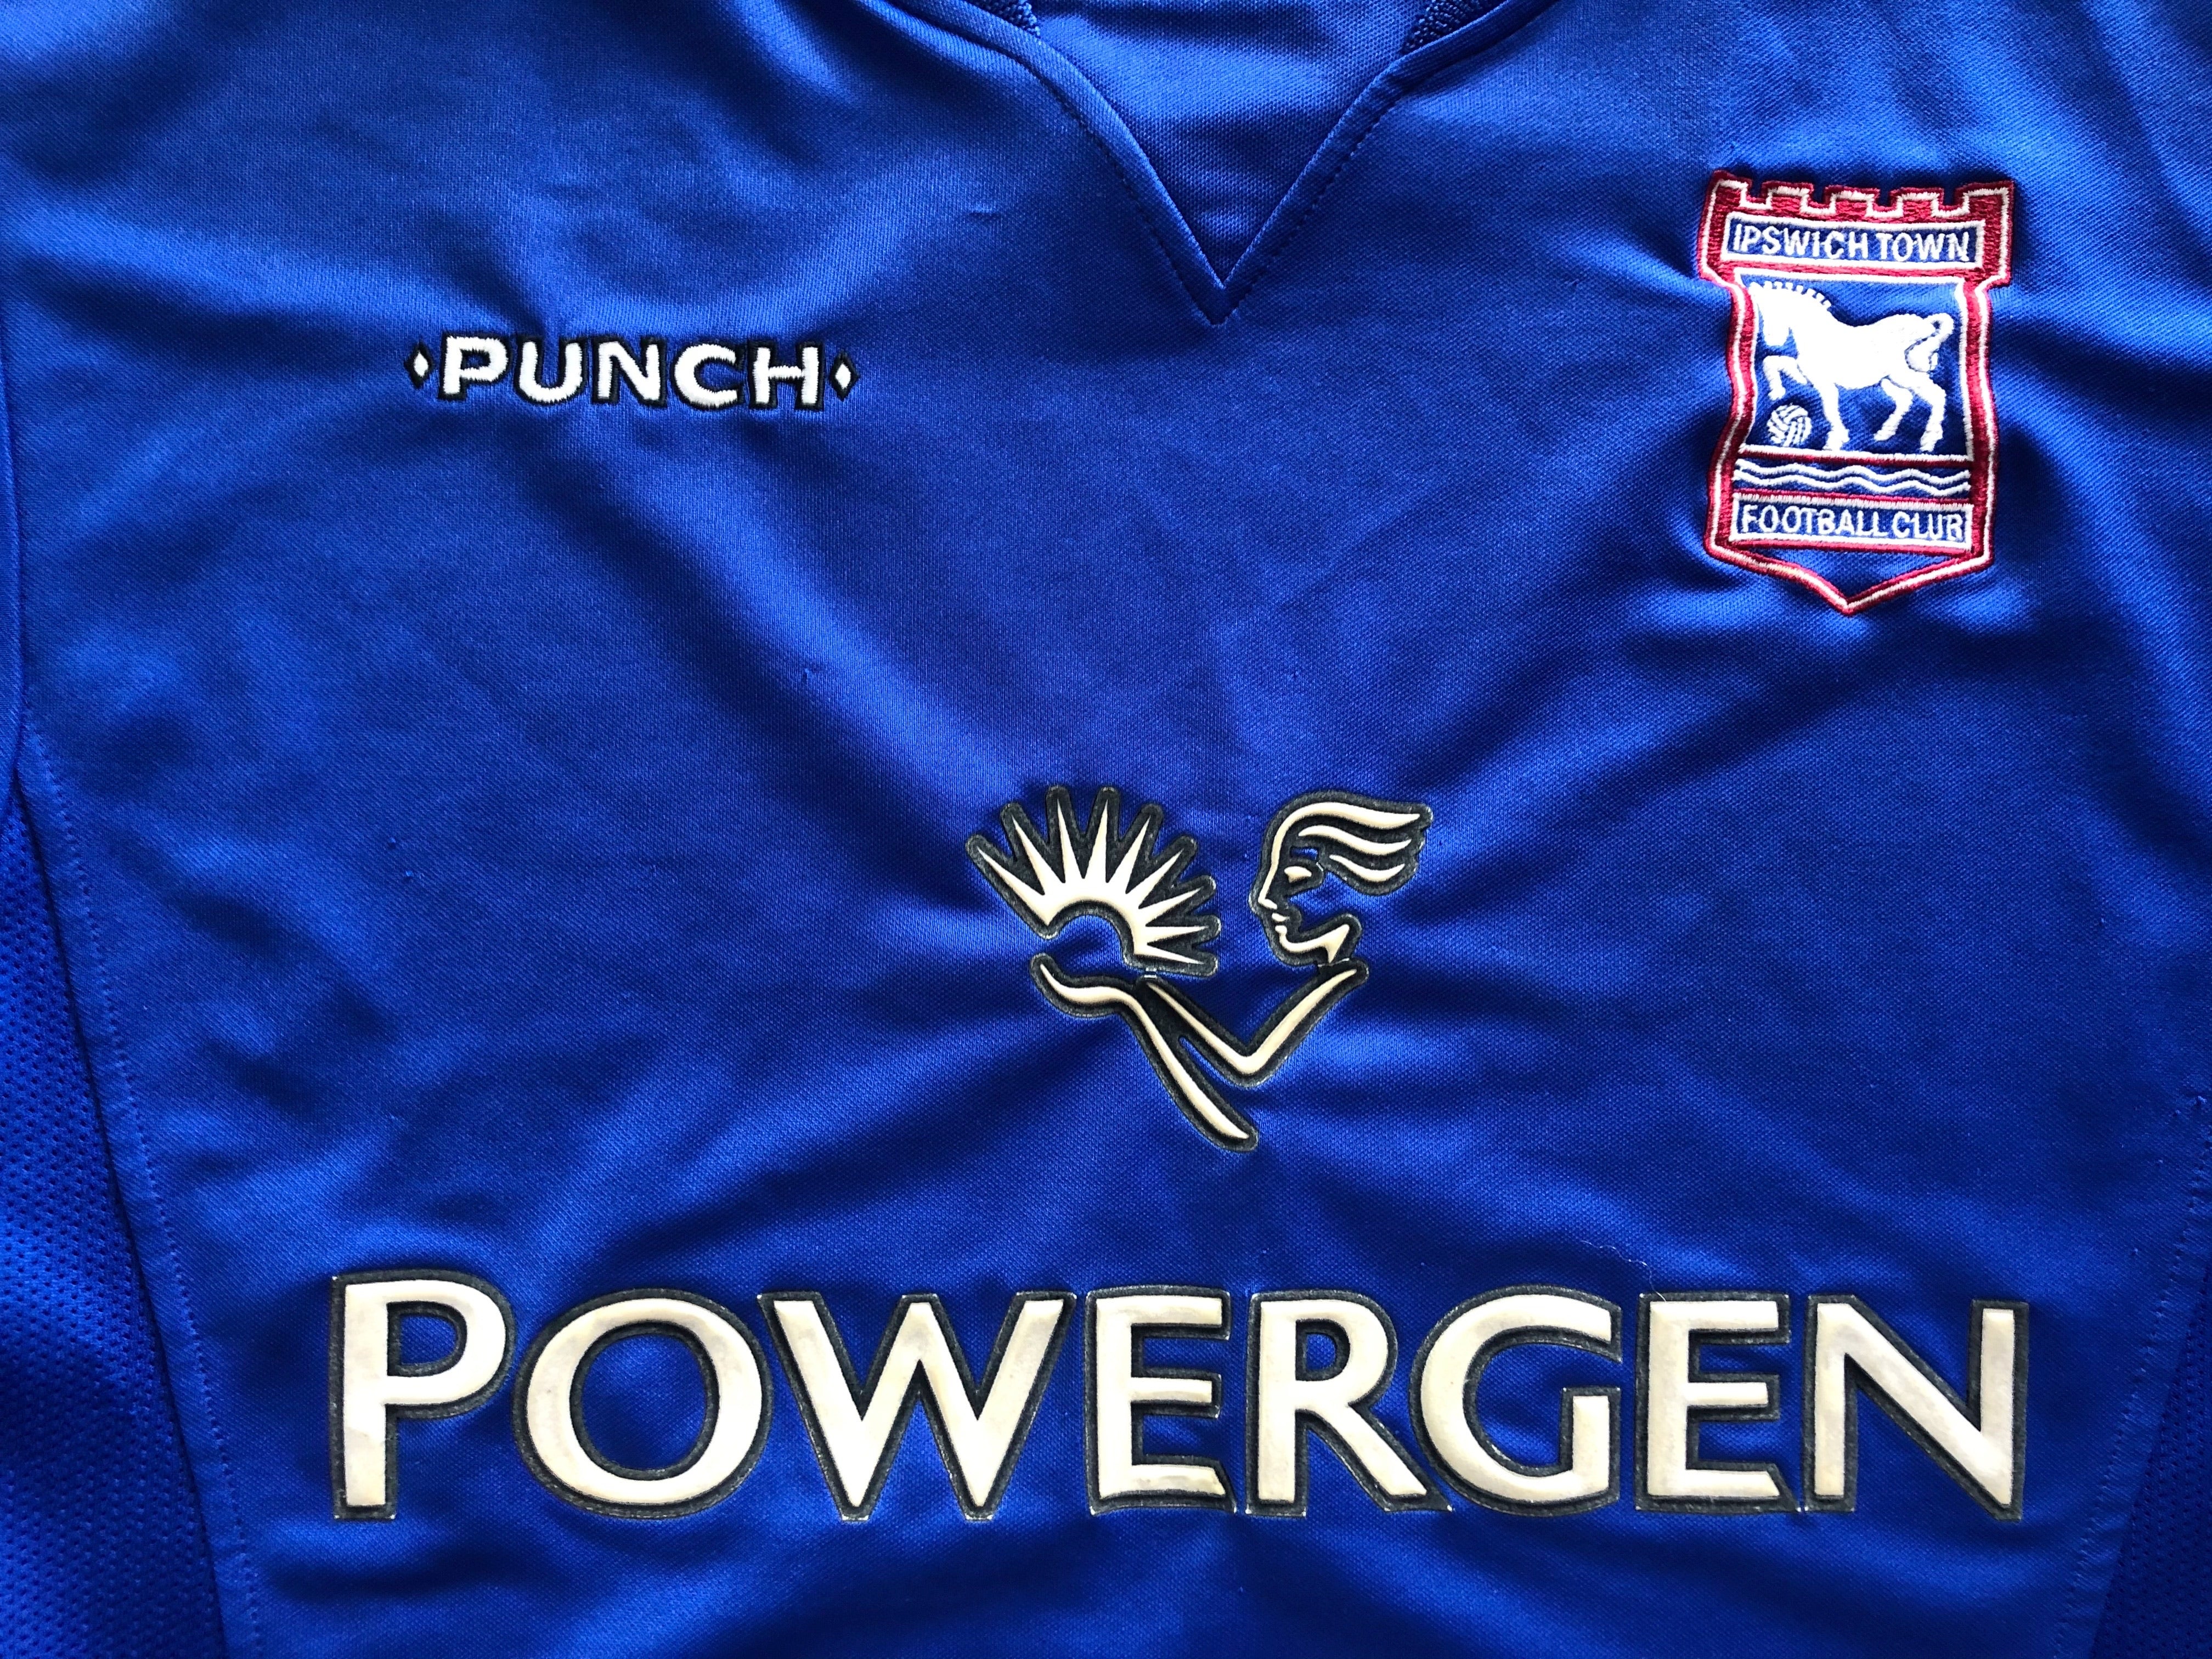 2003/05 Ipswich Town Home Shirt (S) 8.5/10